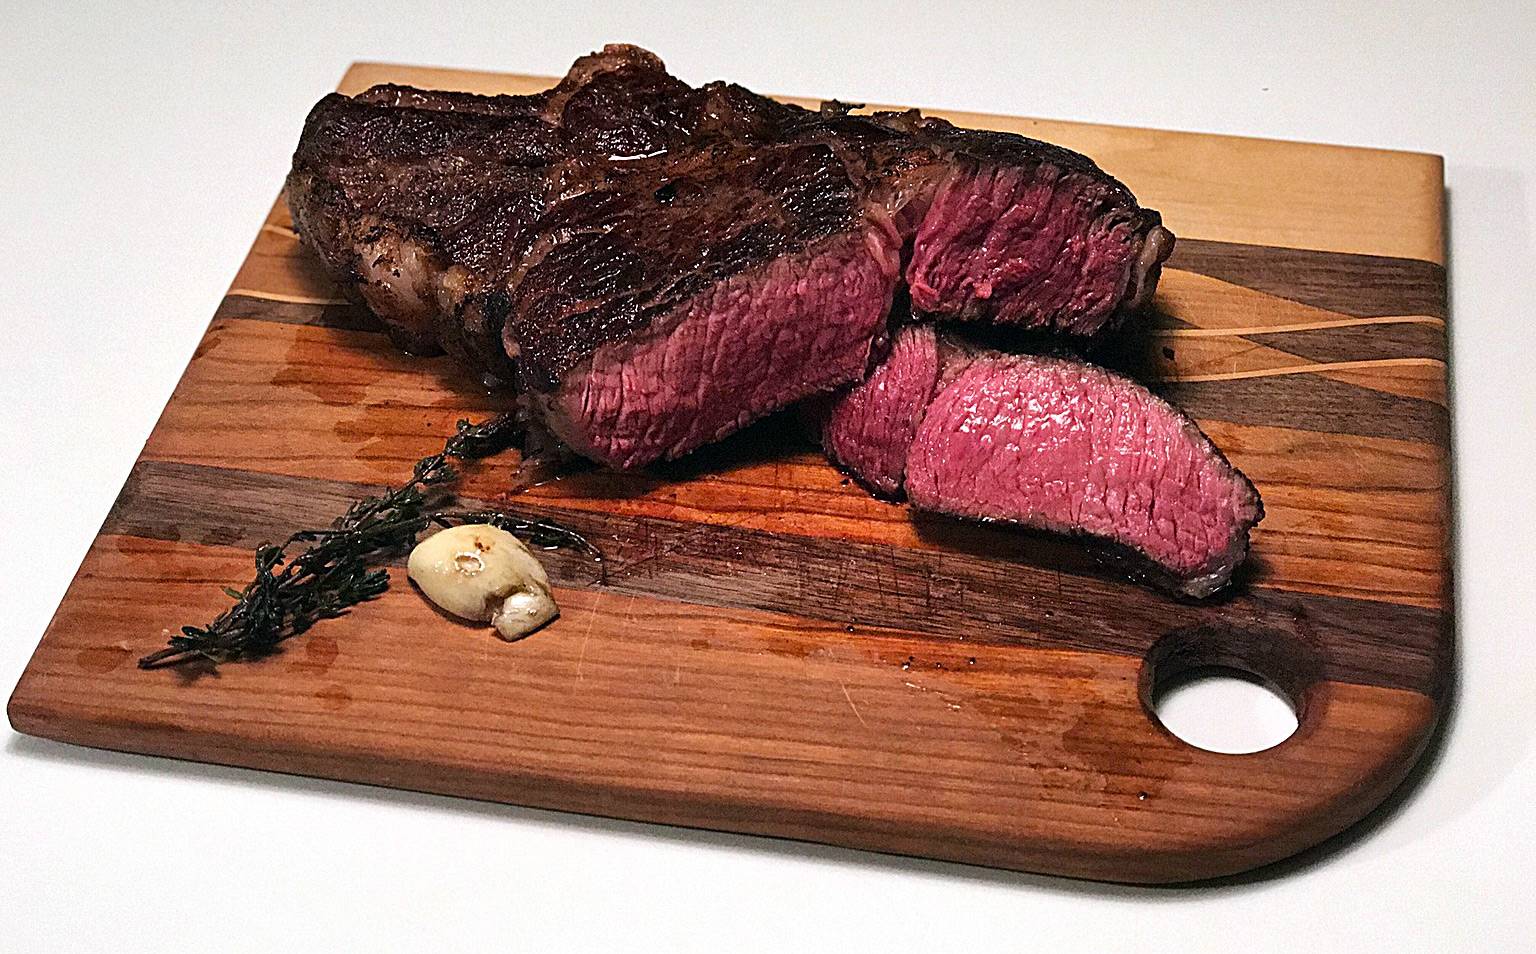 perfectly seared steak